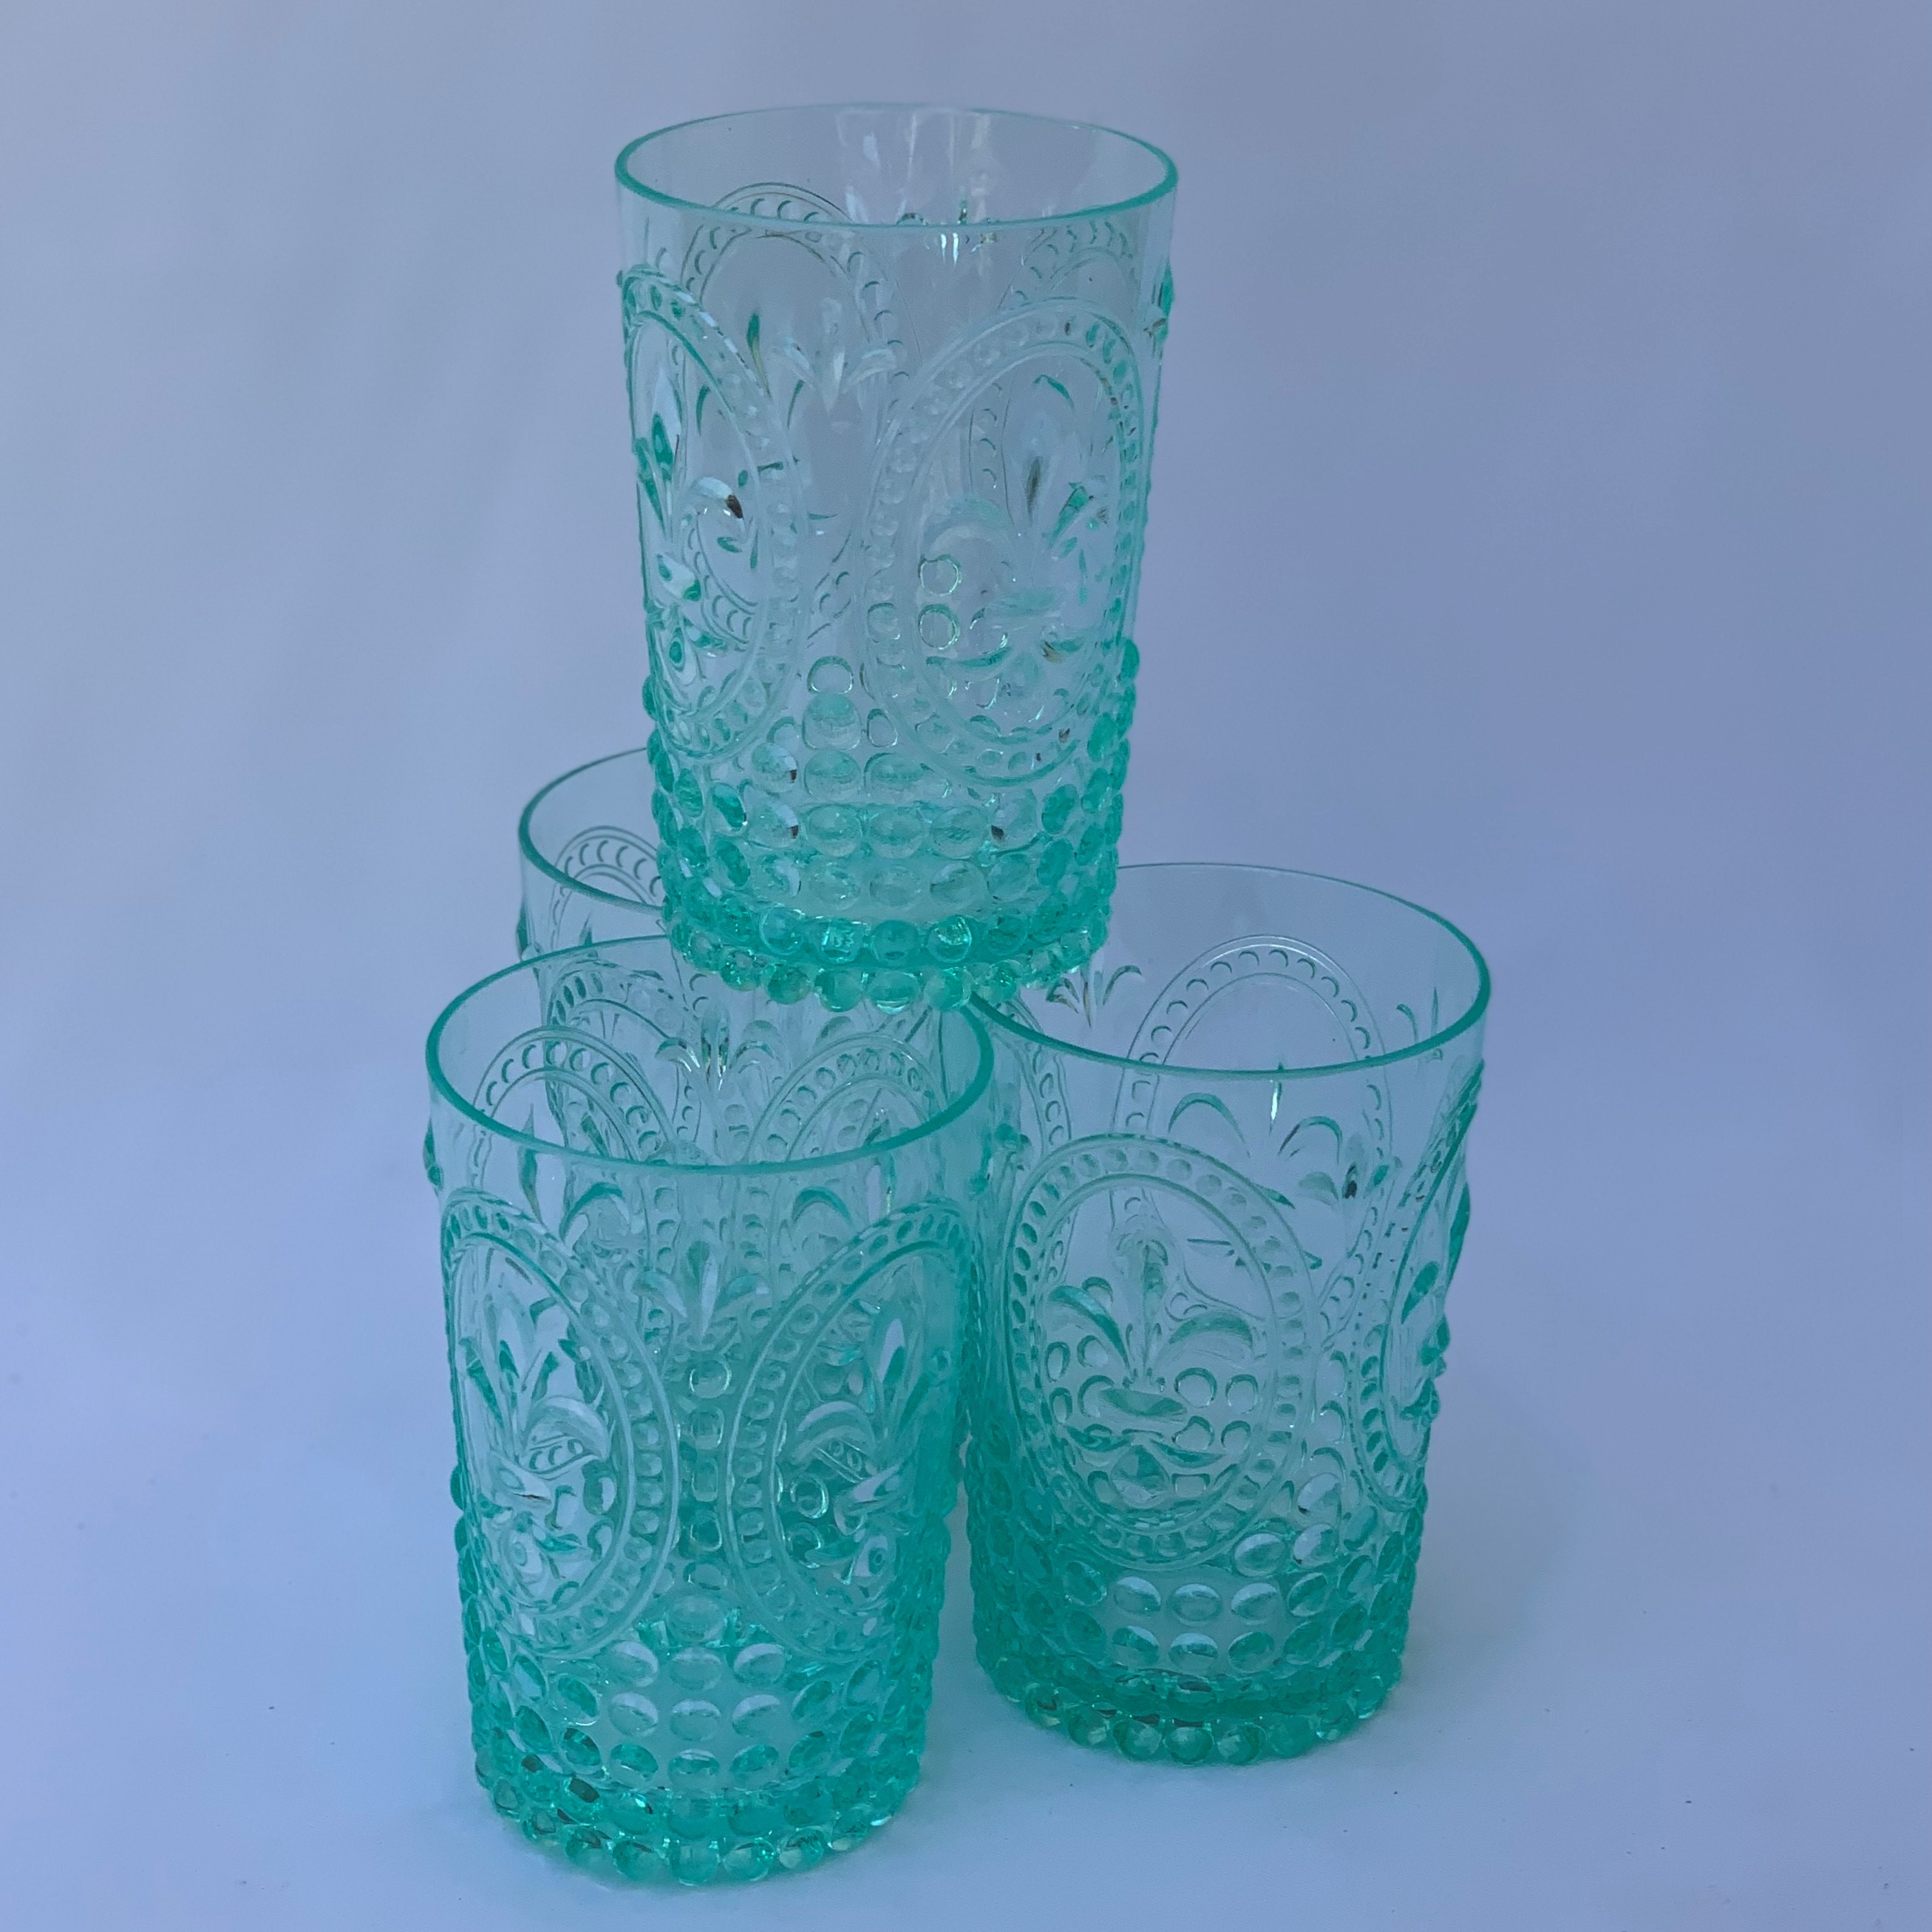 https://www.italianpottery.com/wp-content/uploads/2021/06/plastic-cups-2.jpg